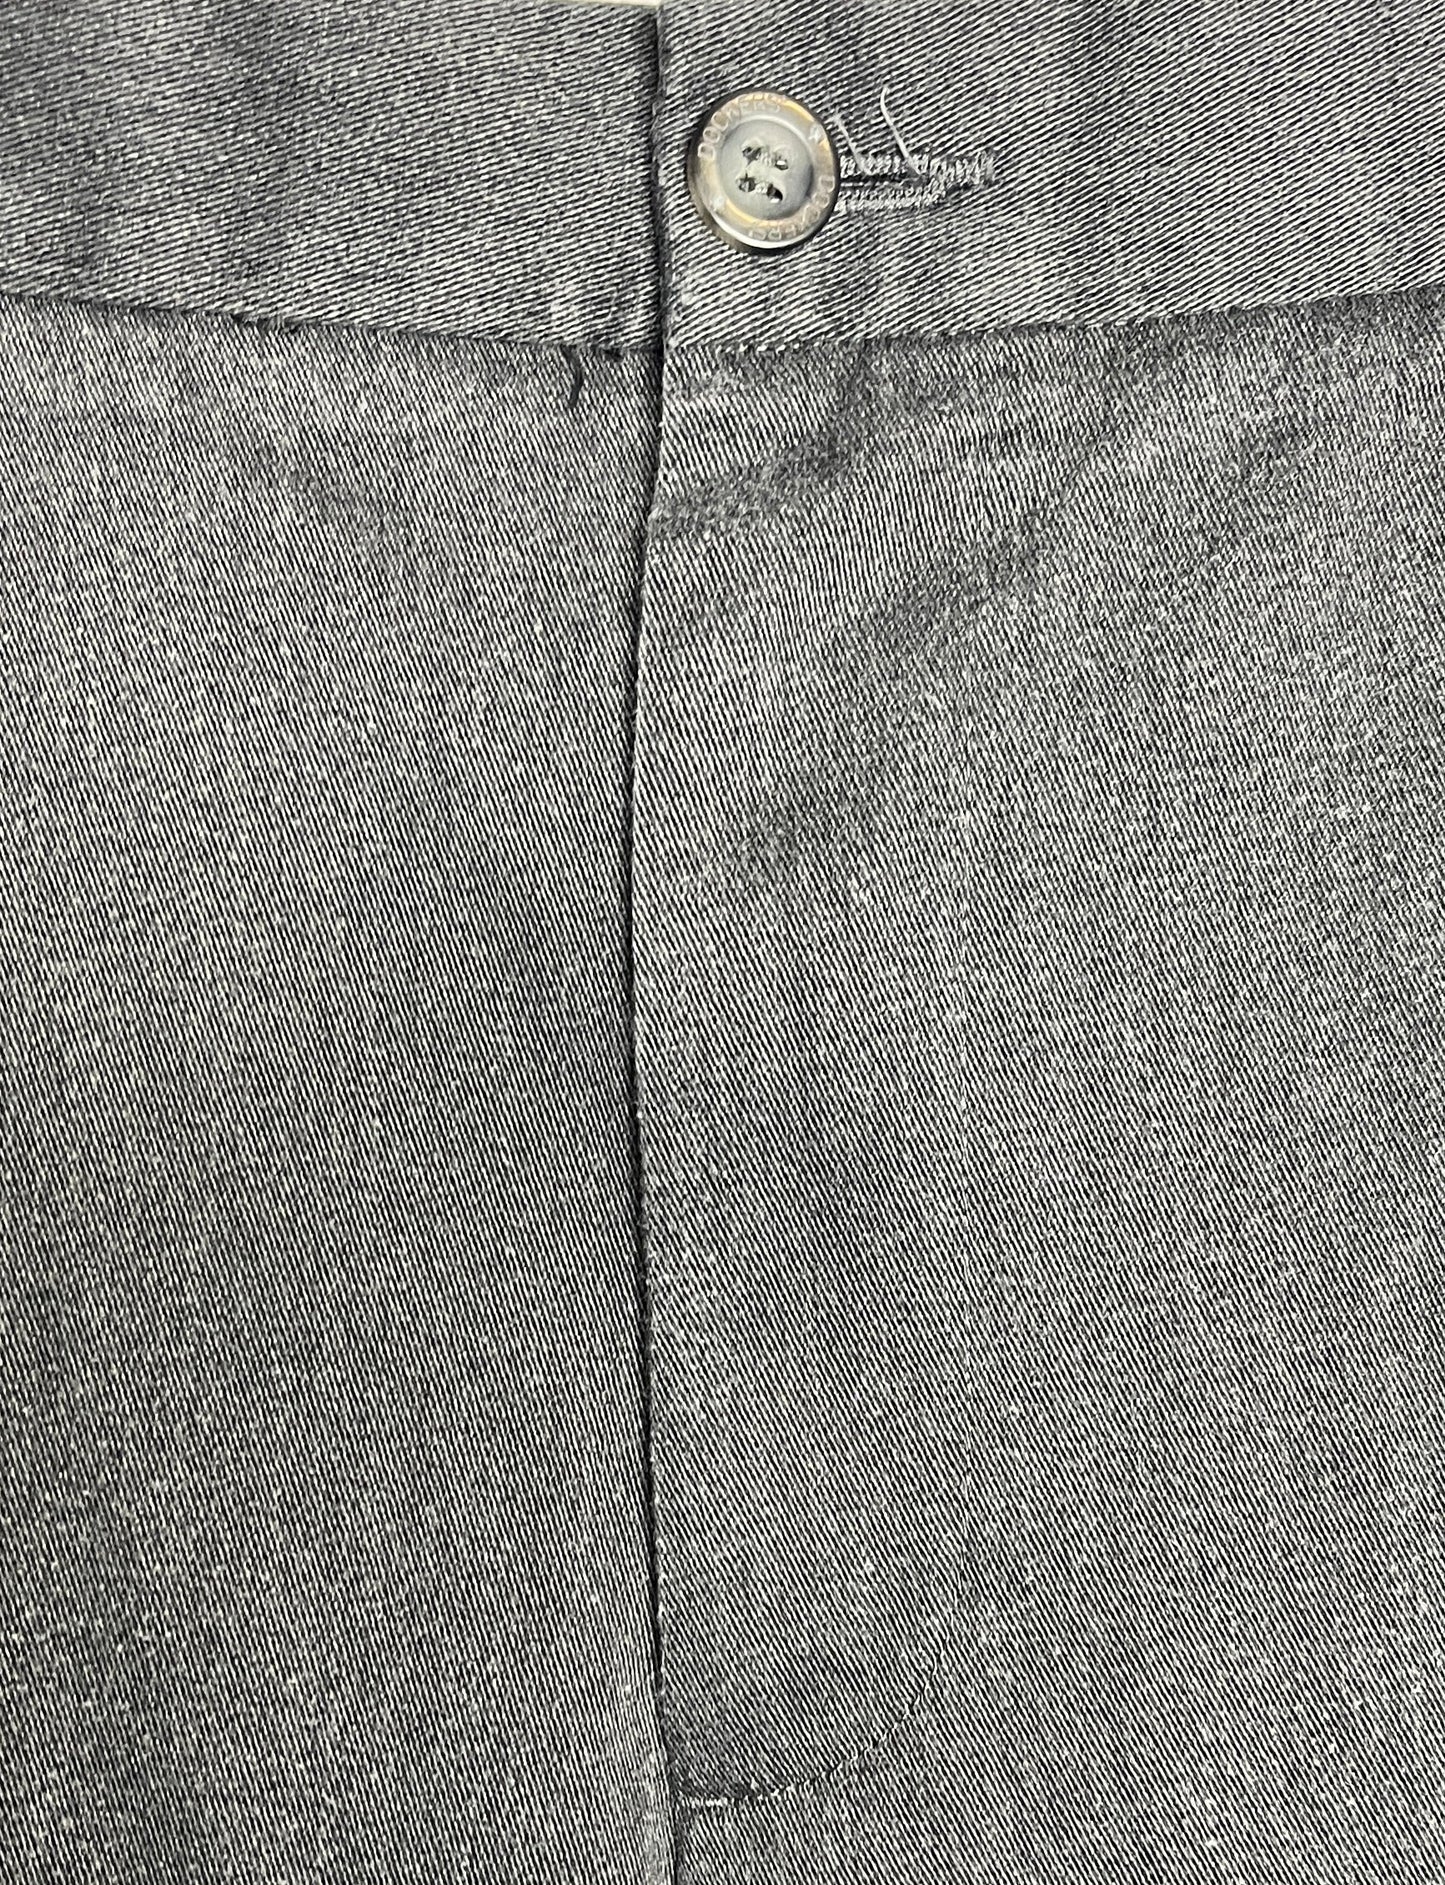 Dockers MEN'S Dress Pants Gray Size 40x34 SKU 000449